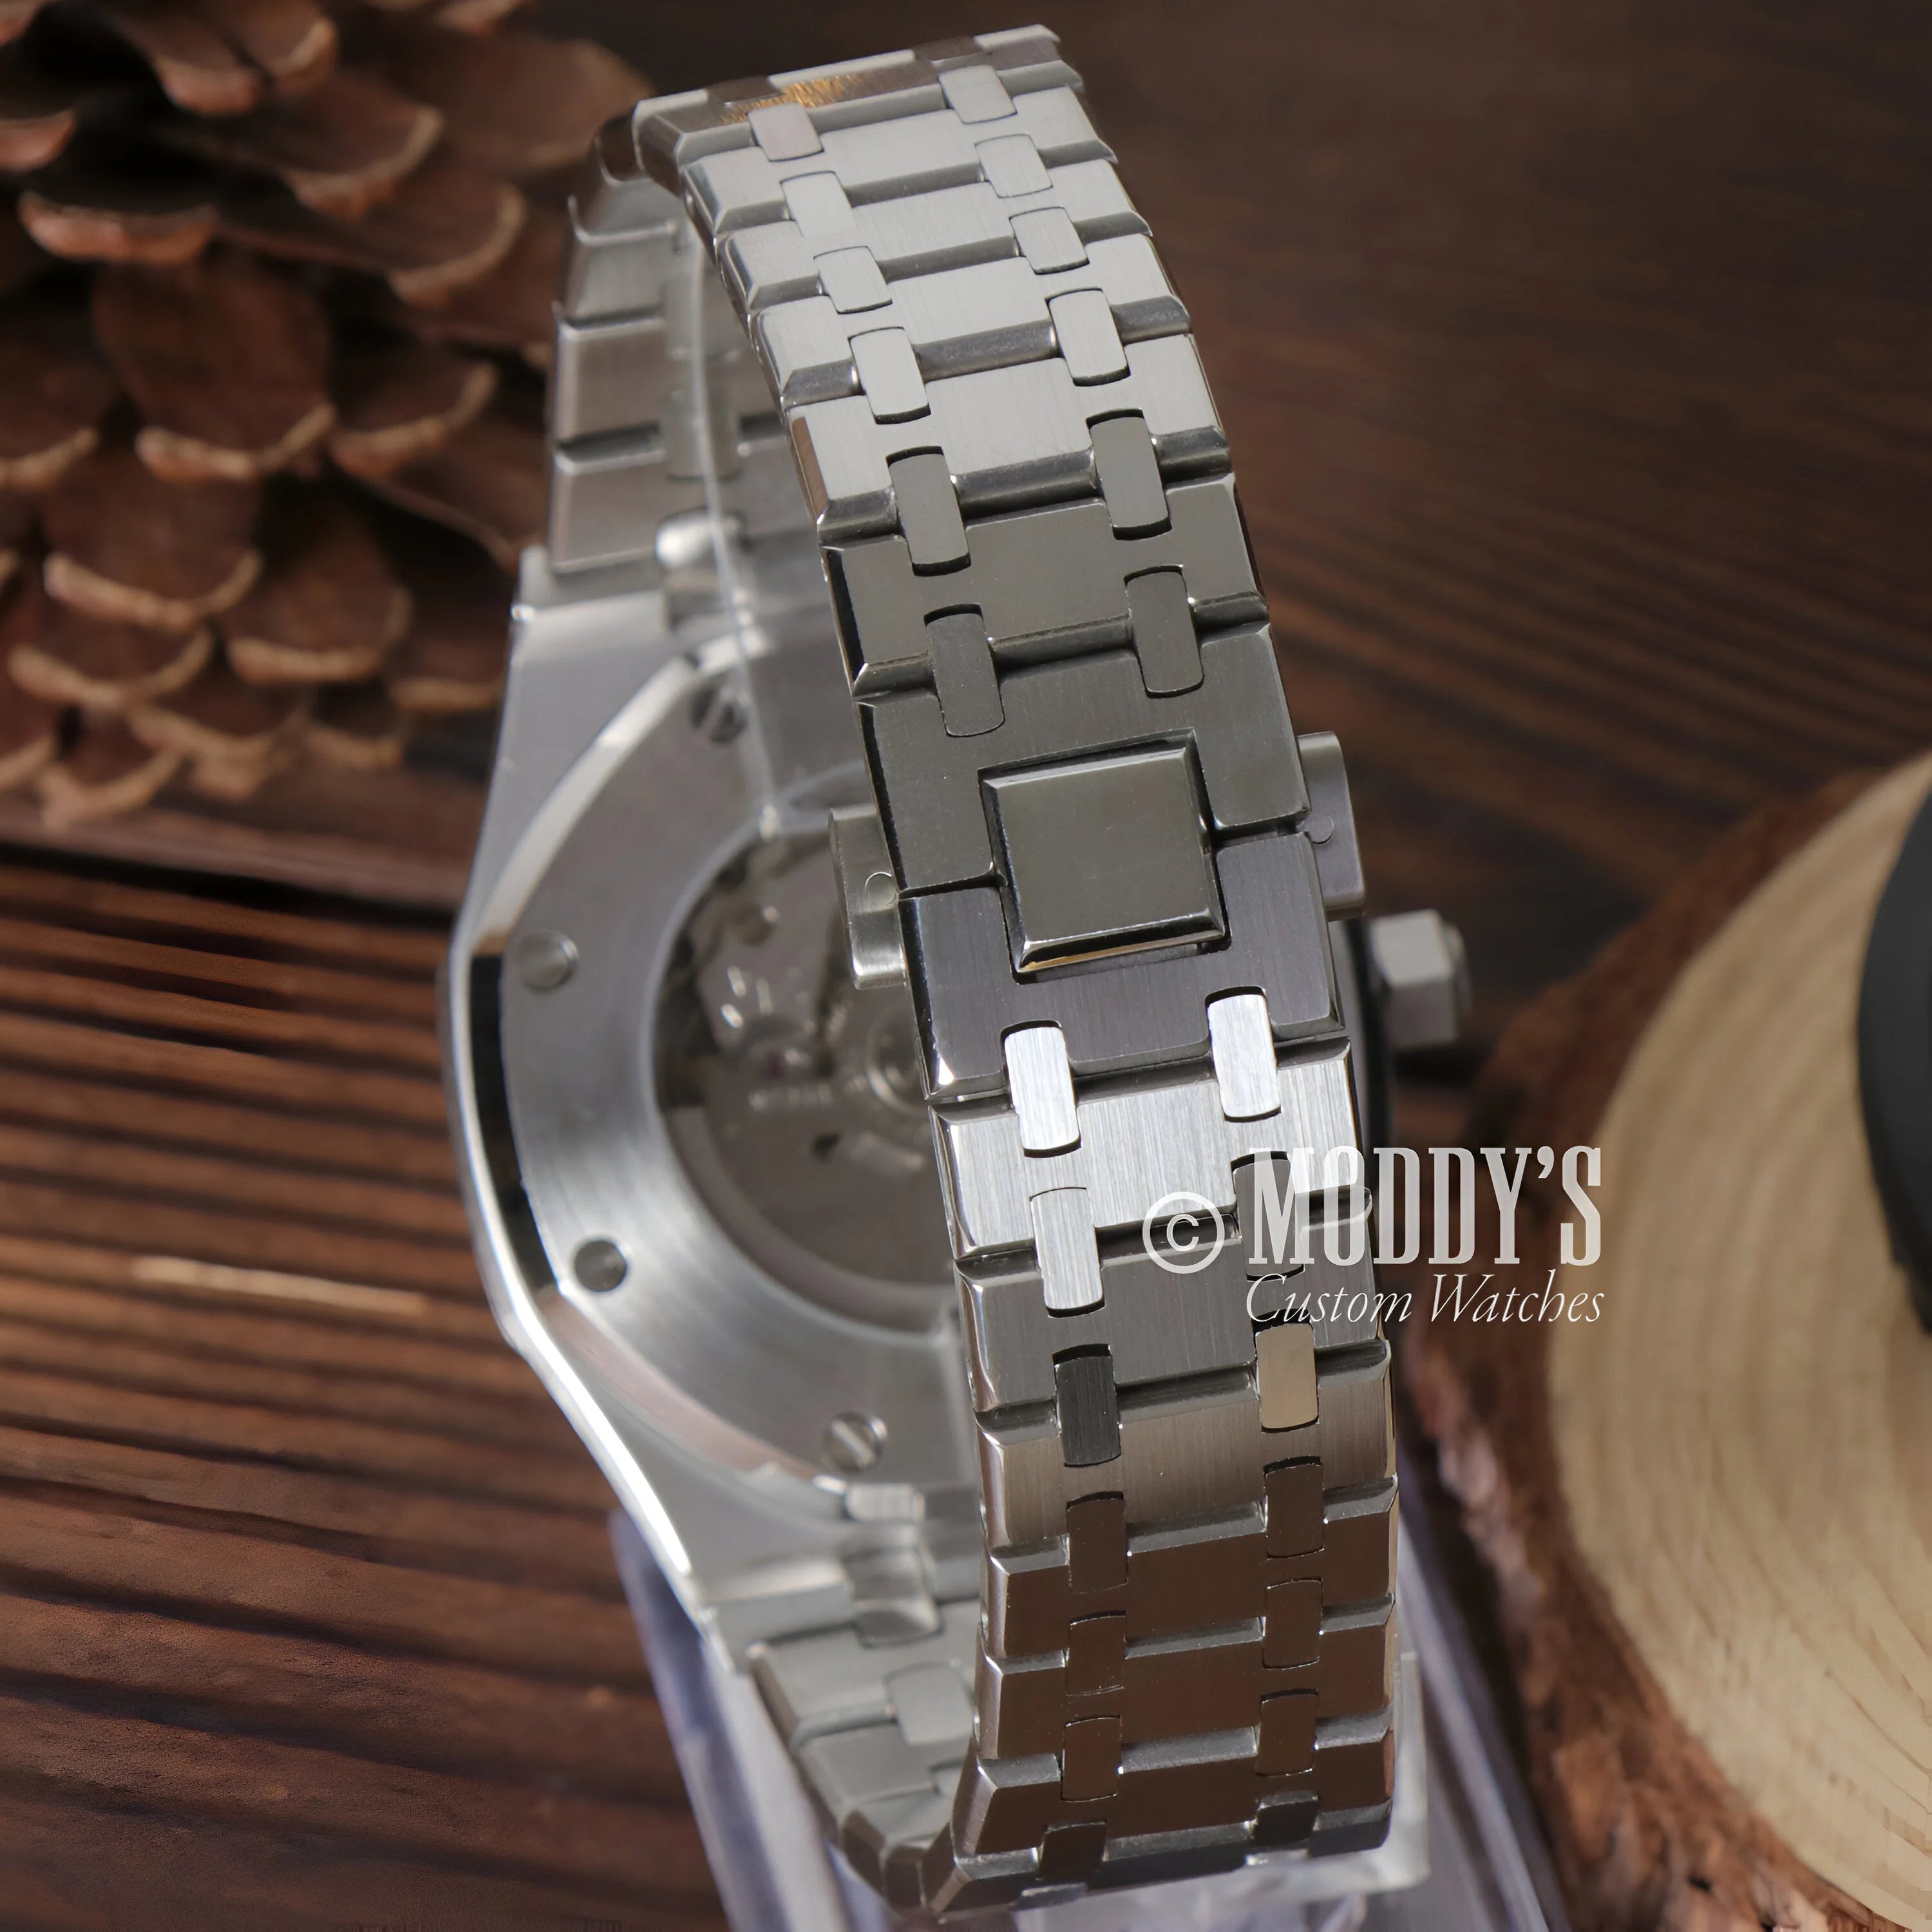 Royal Seikoak Ice Blue: Elegant Silver Metal Watch Bracelet With Intricate Link Design Clasp